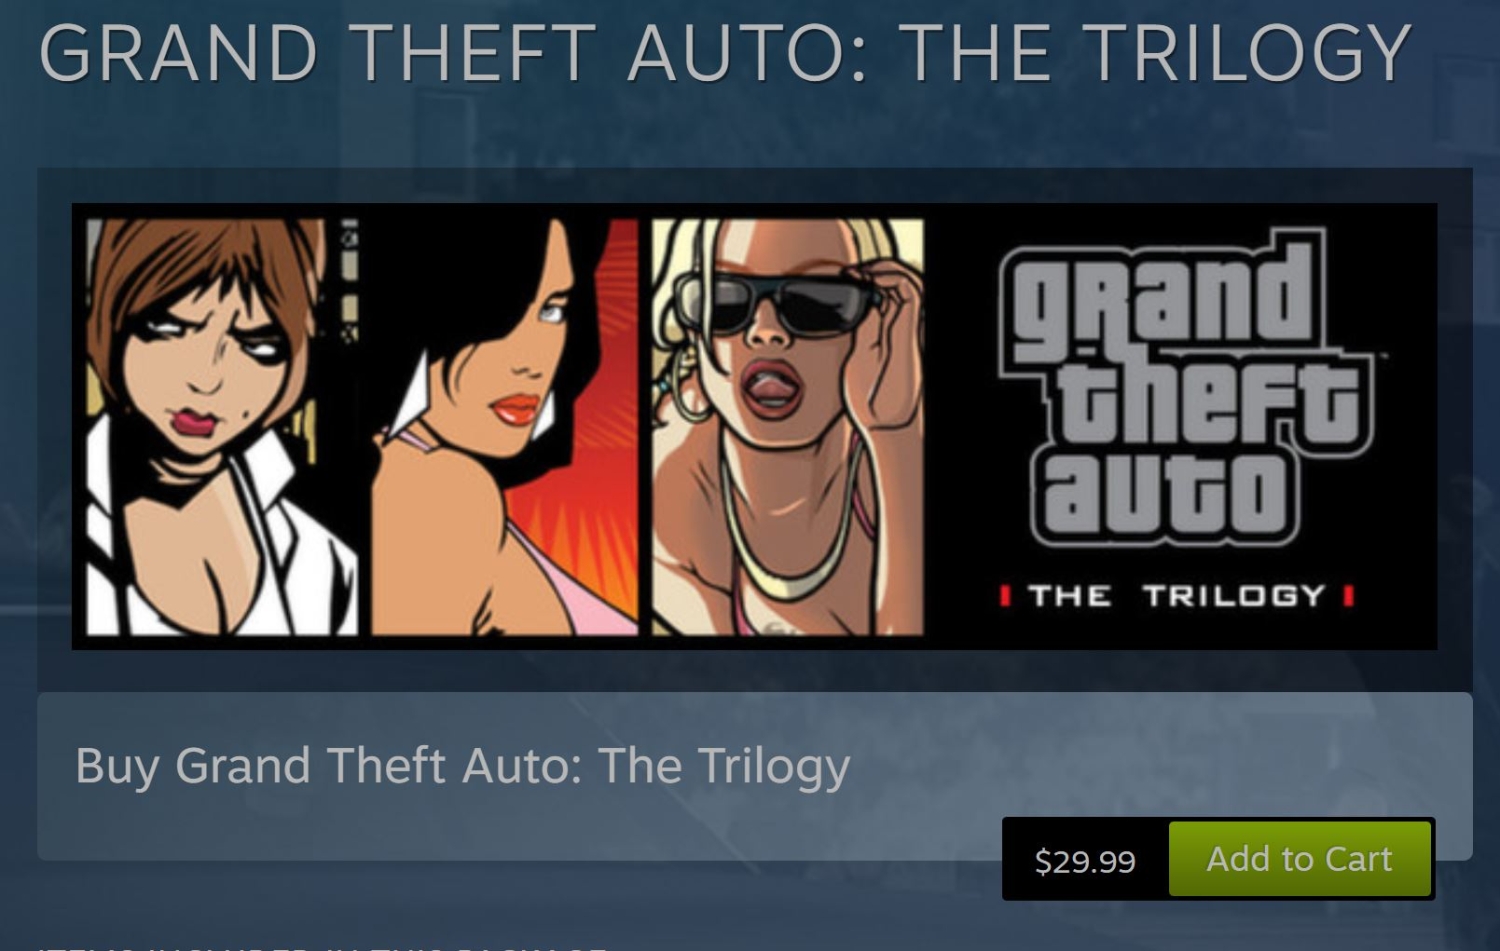 Now that original PS2 GTA Trilogy got a Definitive Edition, I hope